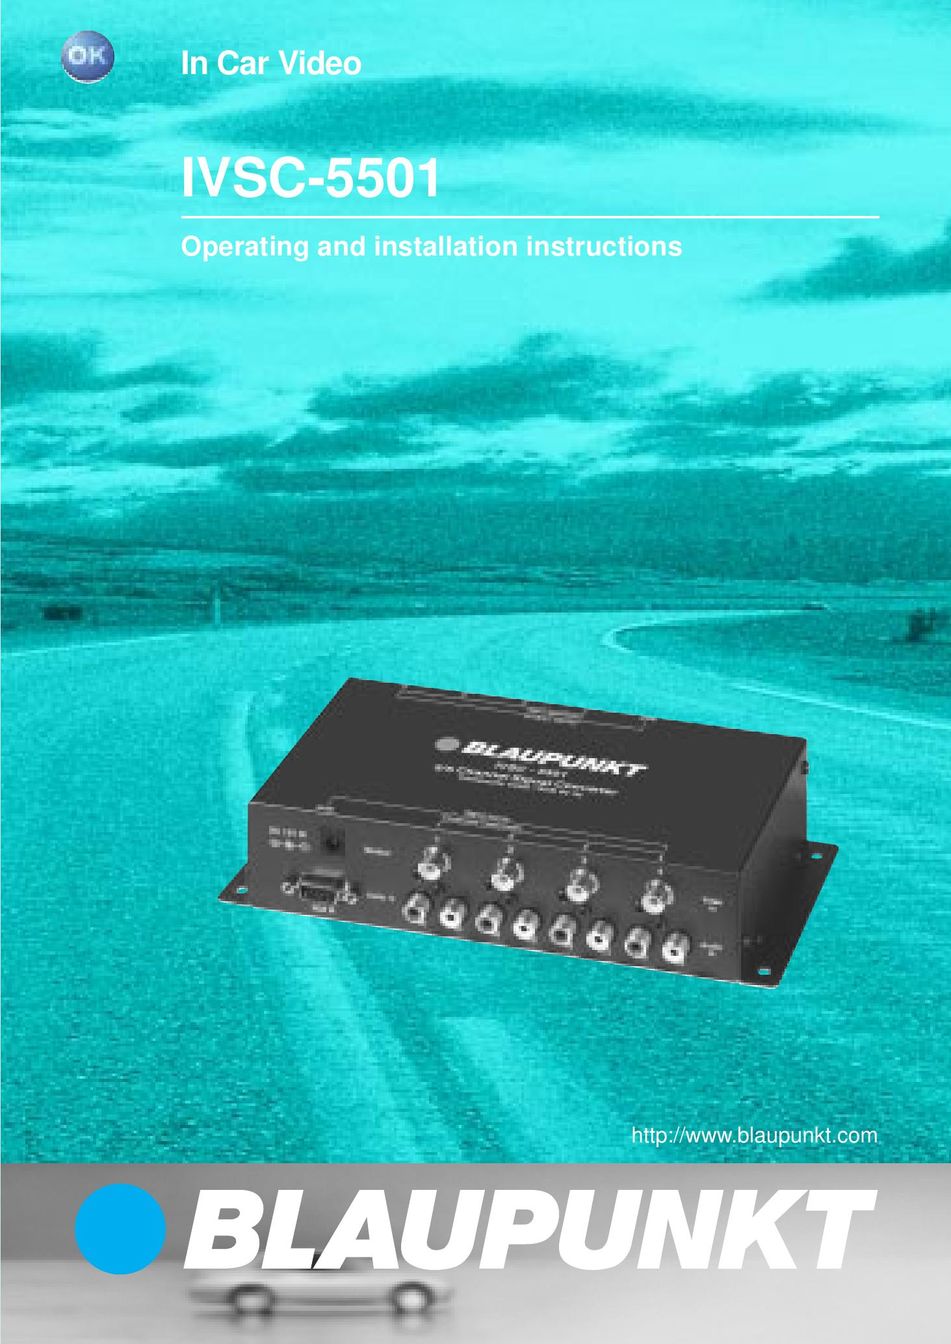 Blaupunkt IVSC-5501 Car Video System User Manual